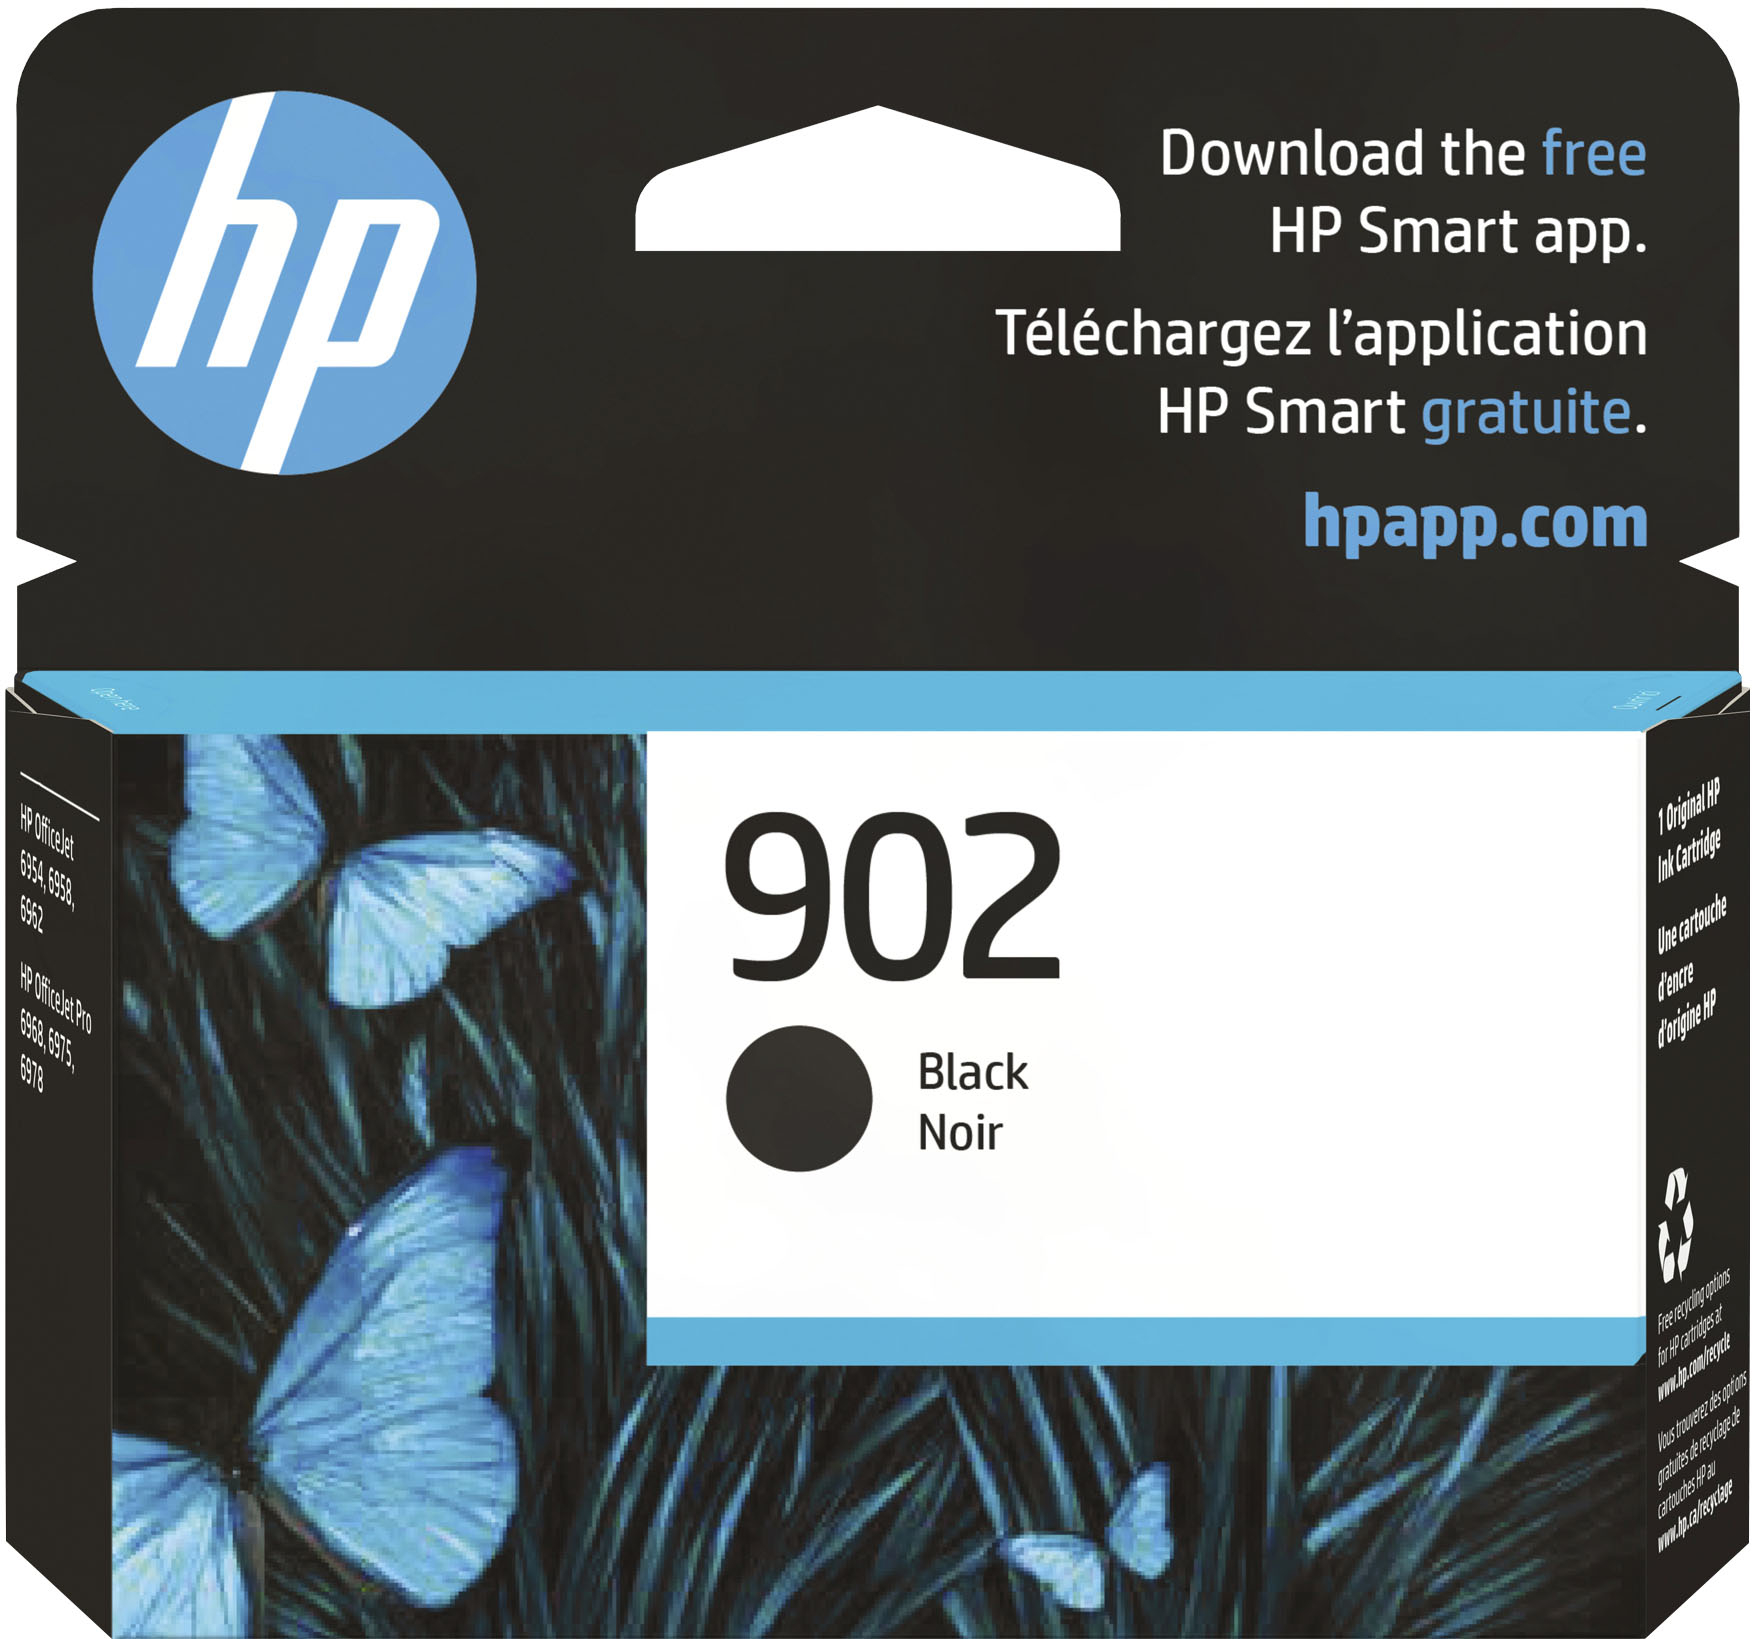 Multipack of HP 903 Ink Cartridges, Low Price Guarantee